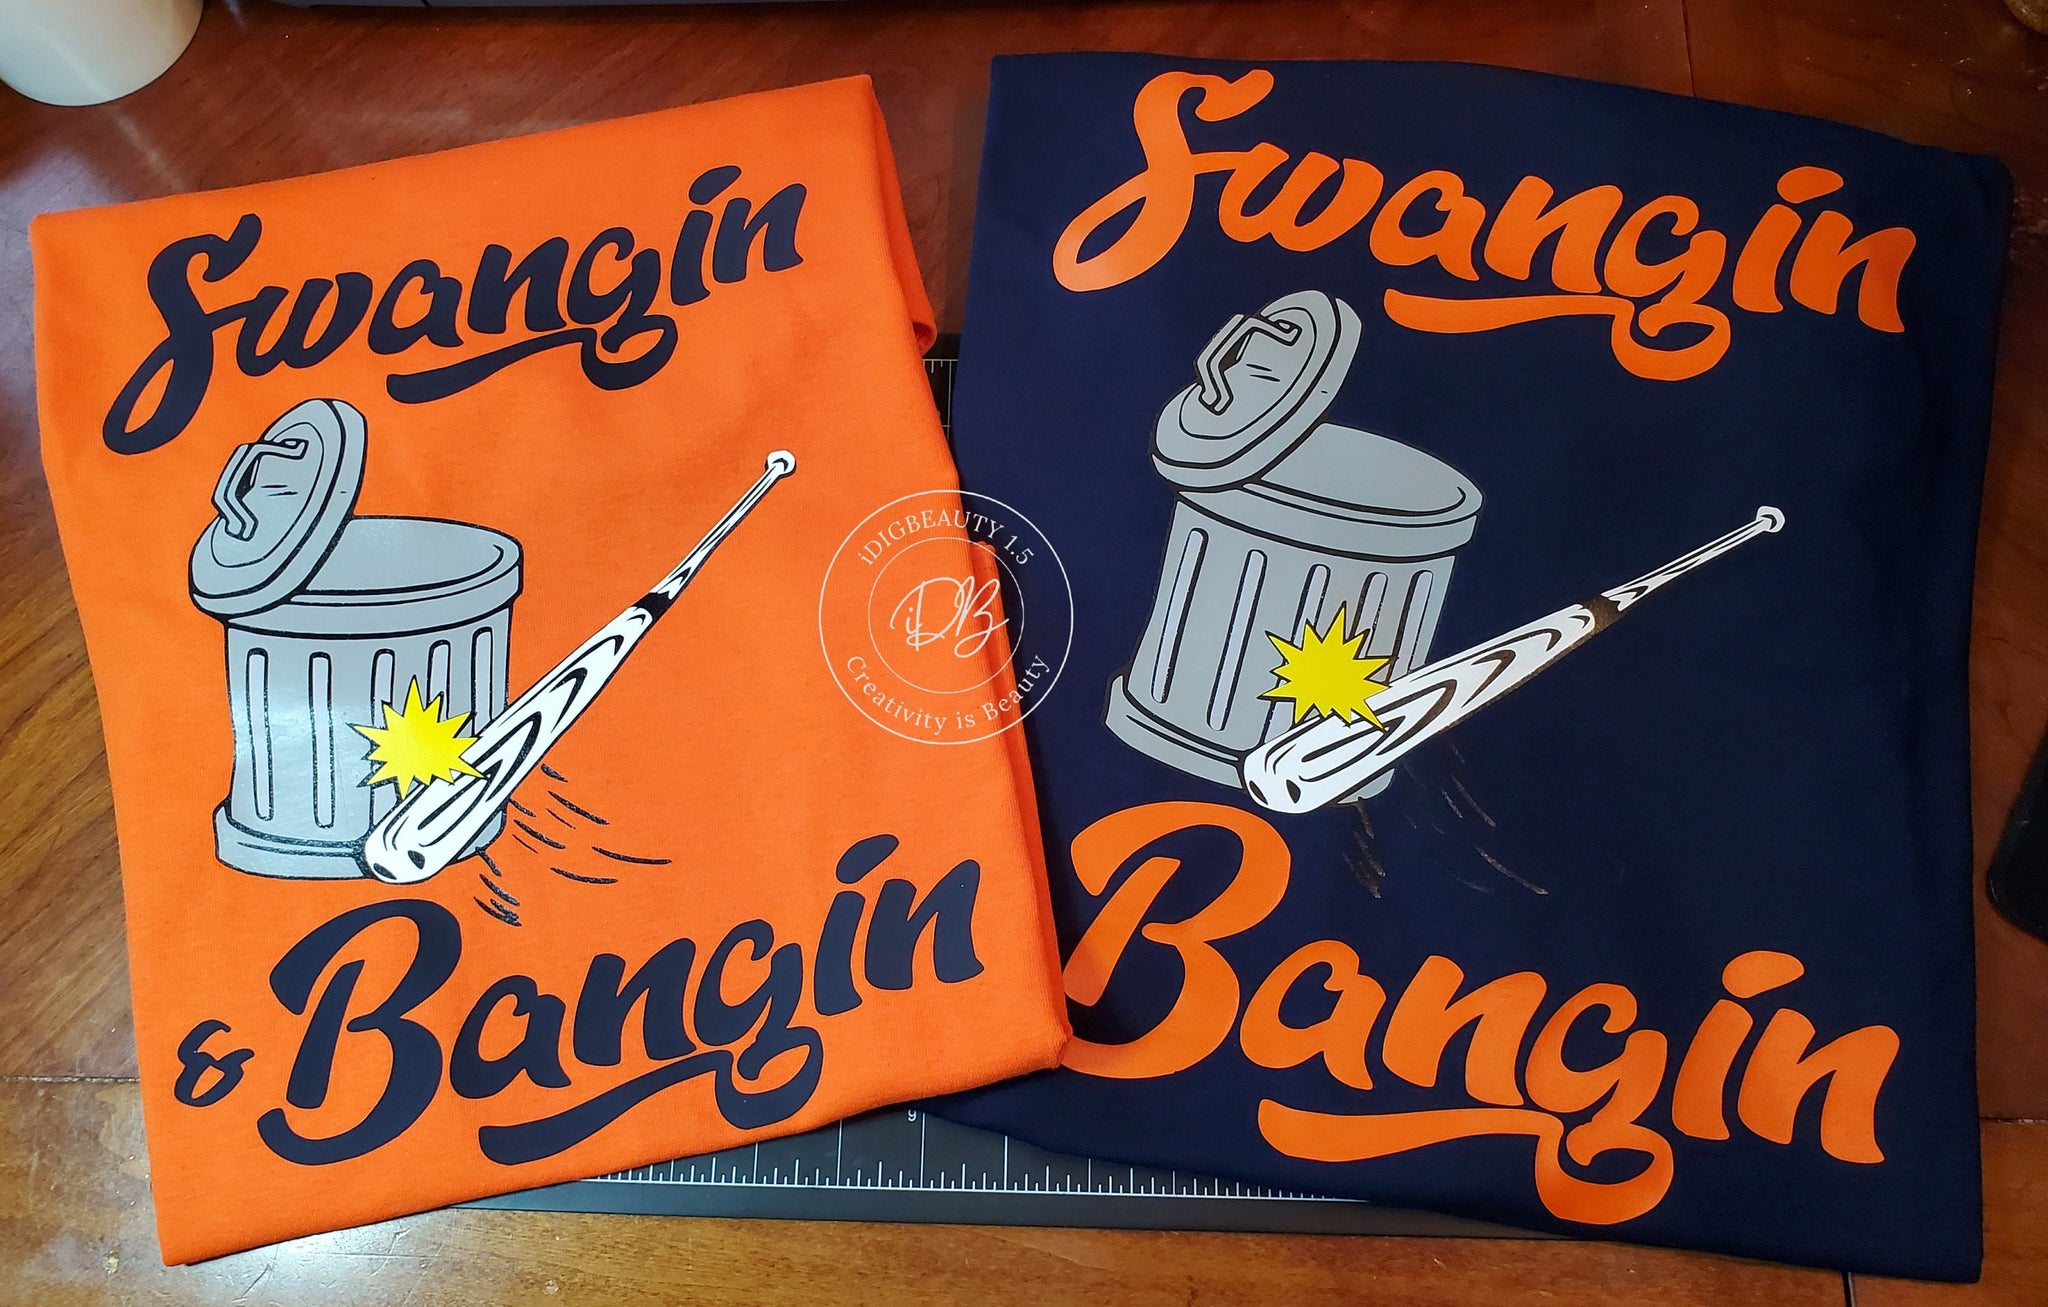 Swangin & Bangin Products